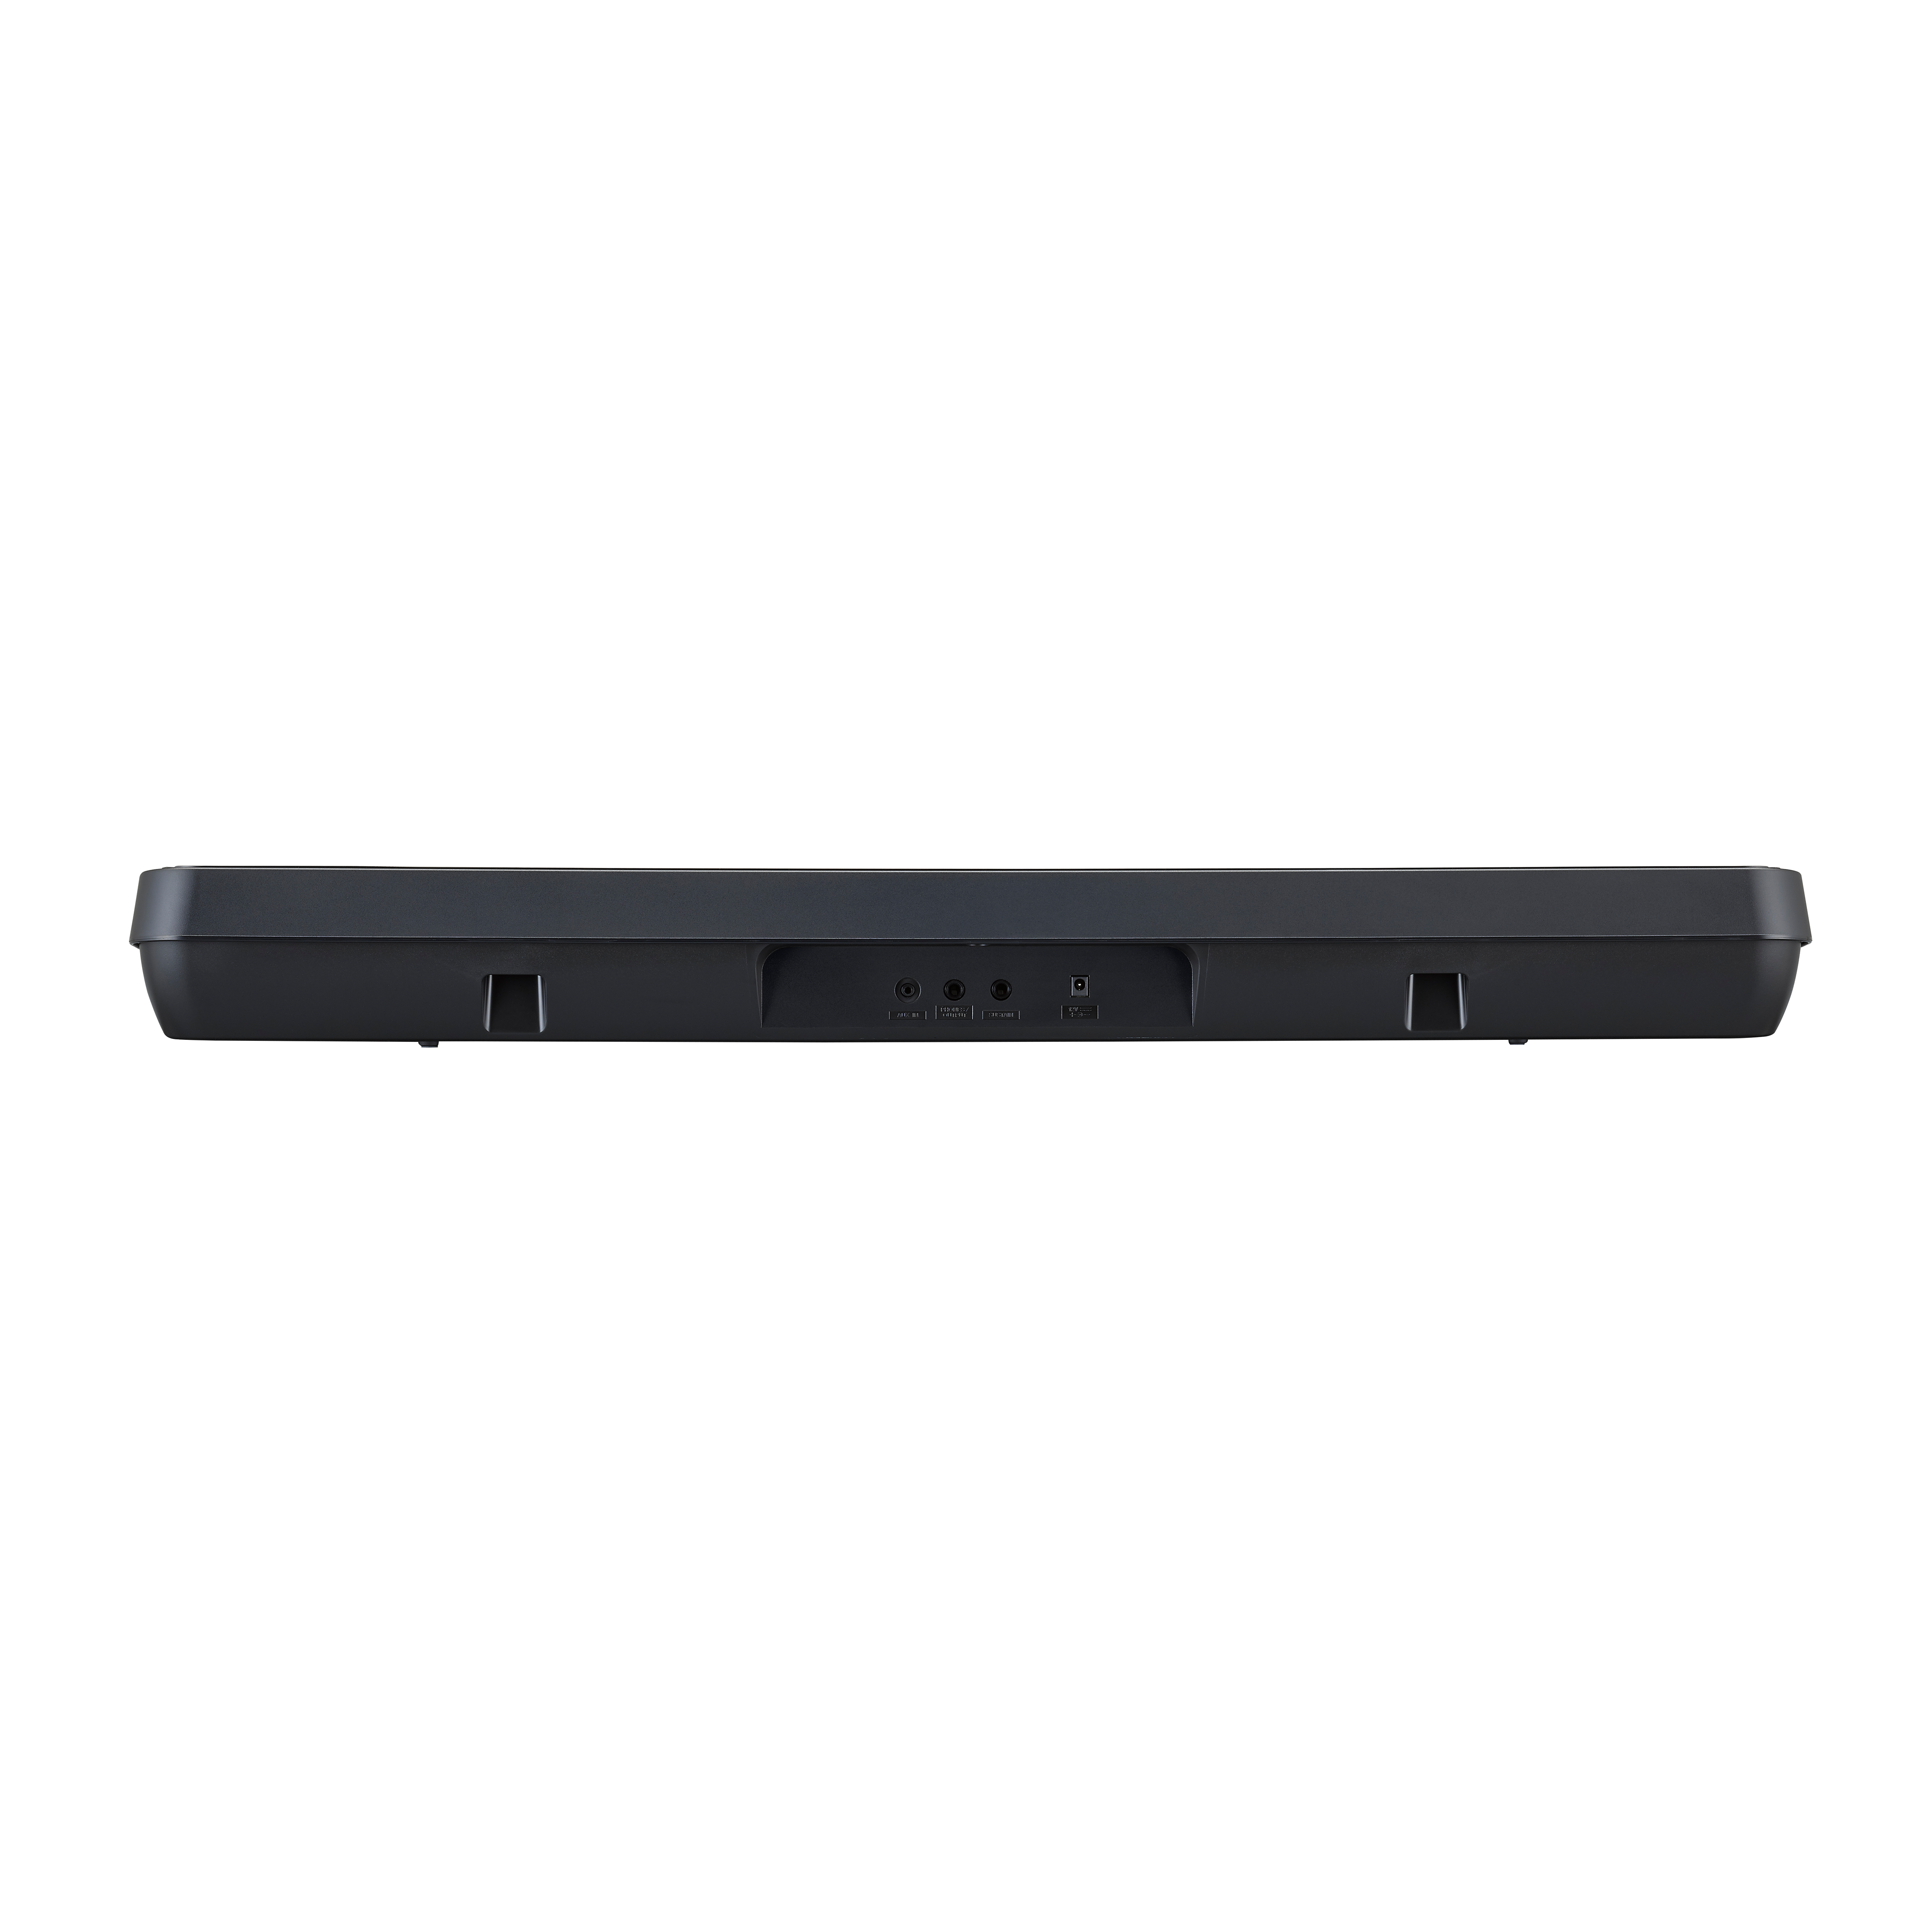 Yamaha PSR-E360 61-Key Portable Keyboard - Black